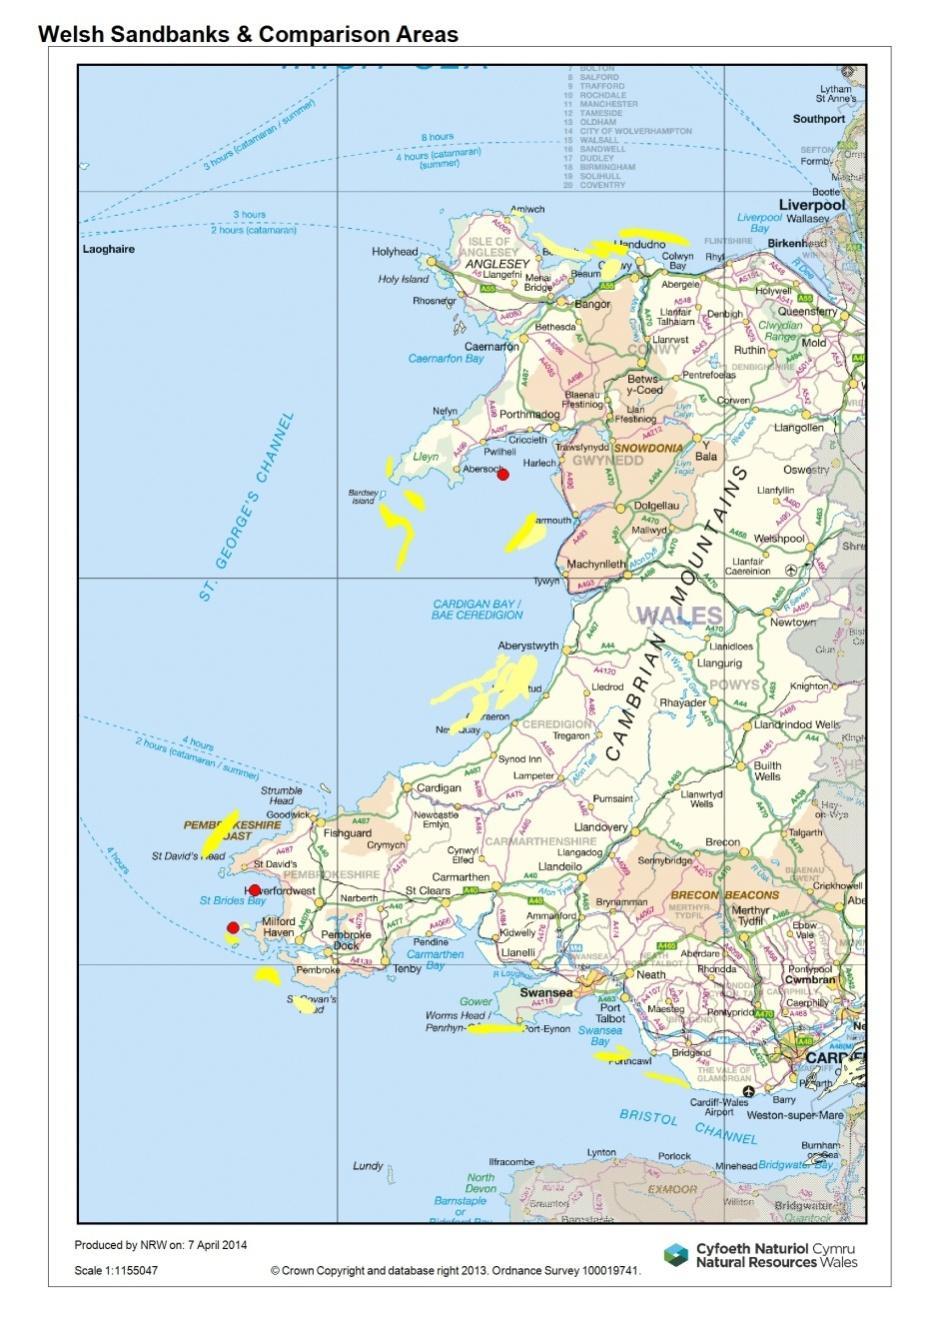 N H'(loge) S The biology of Welsh sandbanks What about the infauna of other sediment habitats? Tremadog Bay, St Bride s Bay & Skomer MNR - Tremadog Bay No apparent decline in diversity measures.